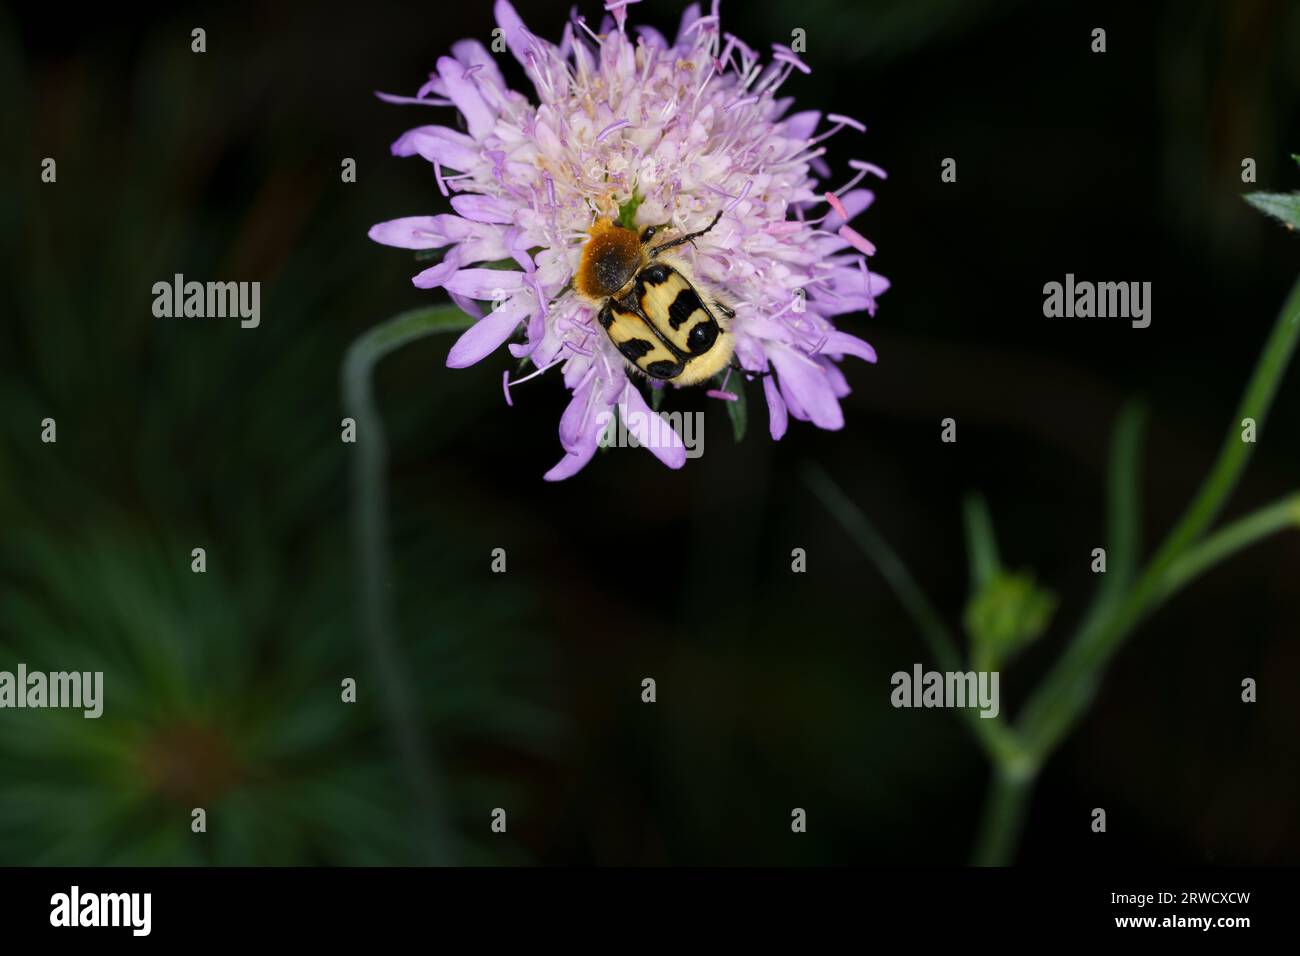 Trichius fasciatus famiglia Scarabaeidae genere Trichius Eurasian bee Beetle-bug natura selvaggia fotografia di insetti, foto, carta da parati Foto Stock